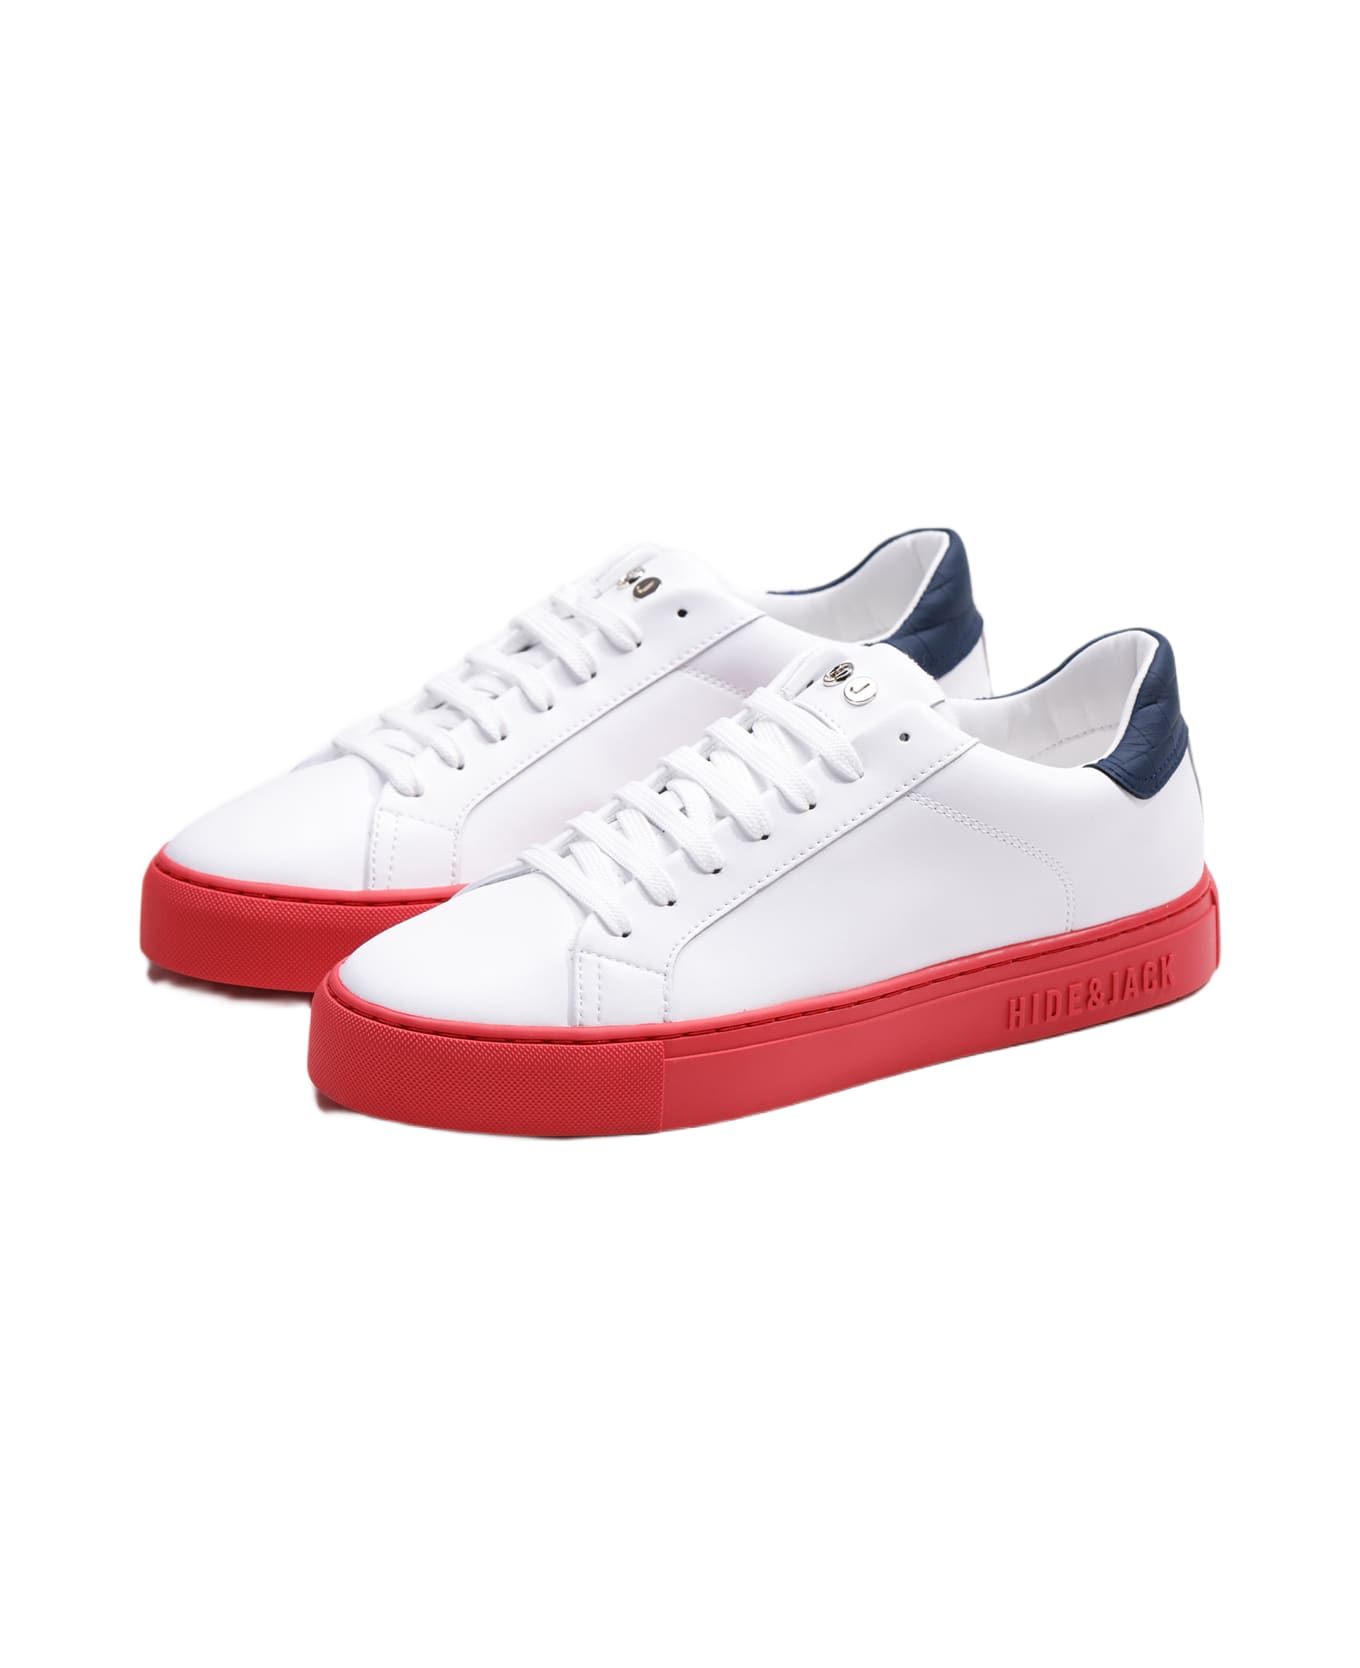 Hide&Jack Low Top Sneaker - Essence Sky Blue Red